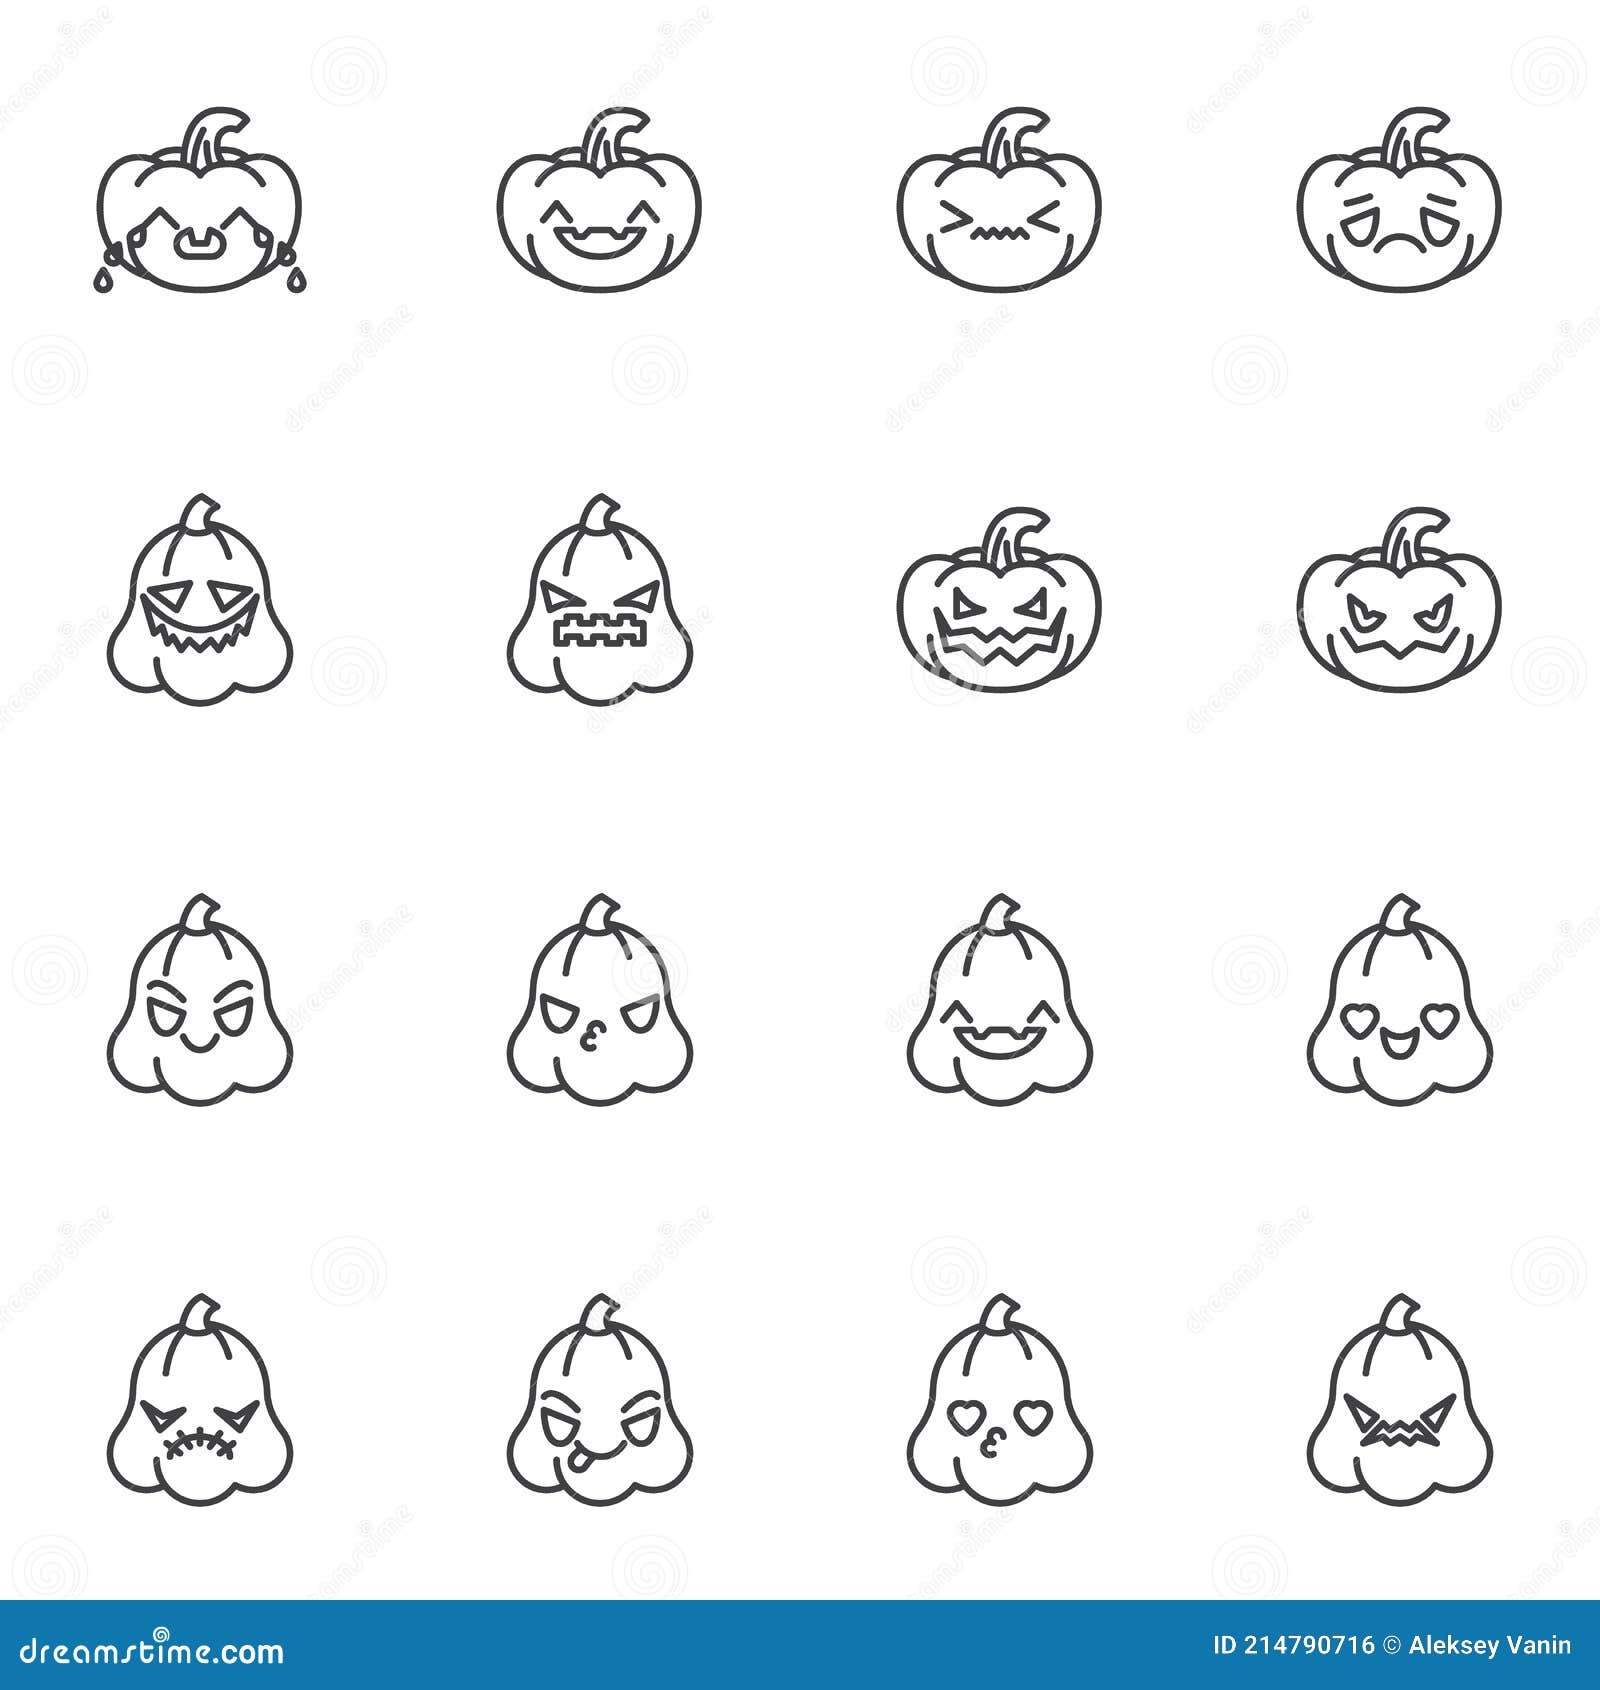 11 emoji pumpkin templates thatll make carving so much fun pumpkin - free emoji pumpkin templates popsugar tech | emoji pumpkin template printable